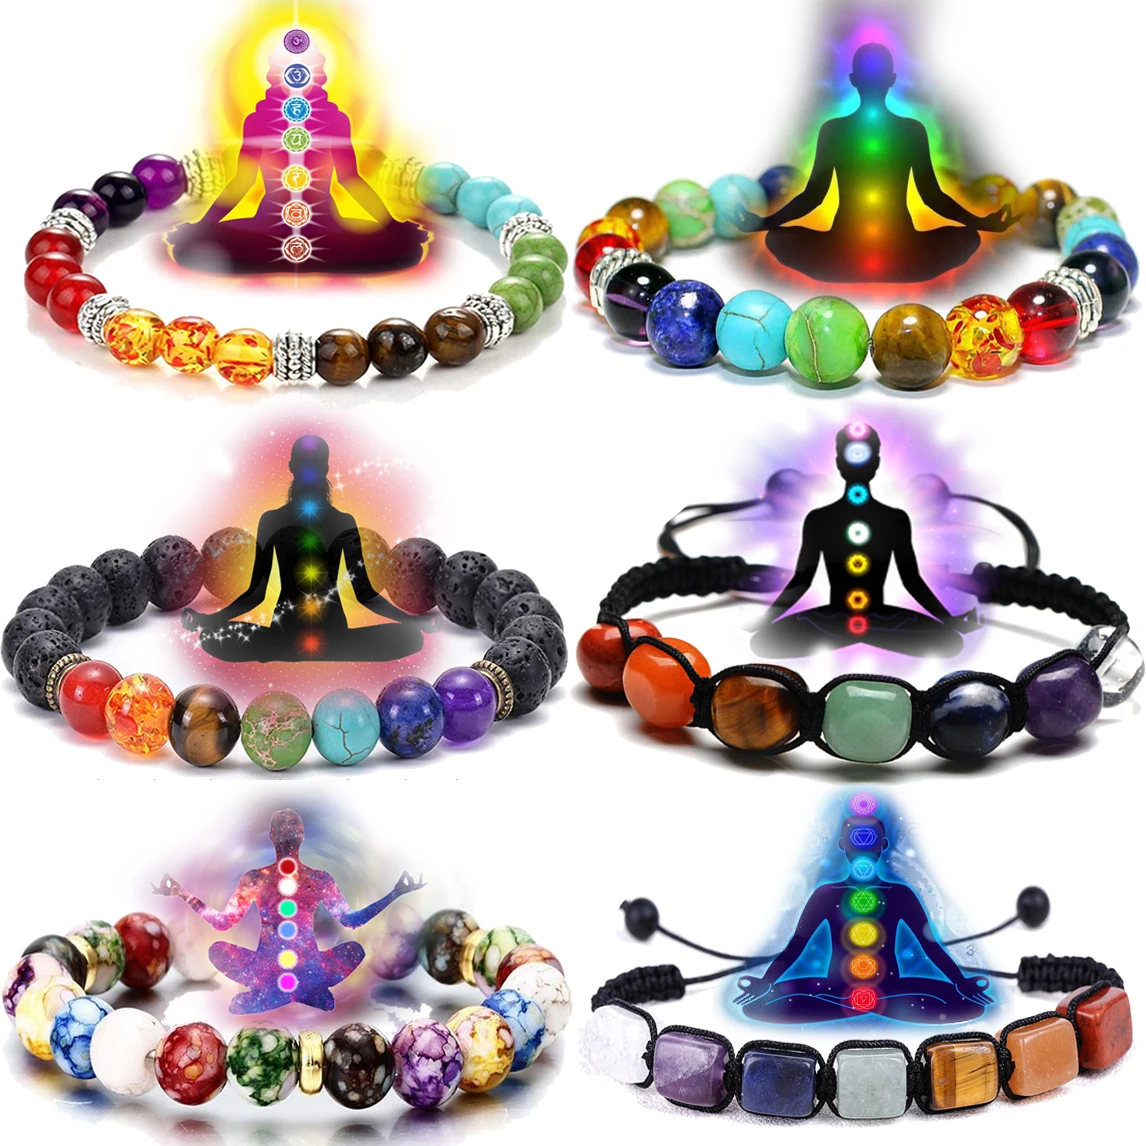 

7 Chakra Reiki Healing Stone Bracelet Balance Energy Volcanic Lava Rock Stones Beads Bracelets Women Jewelry Chakras Crystals